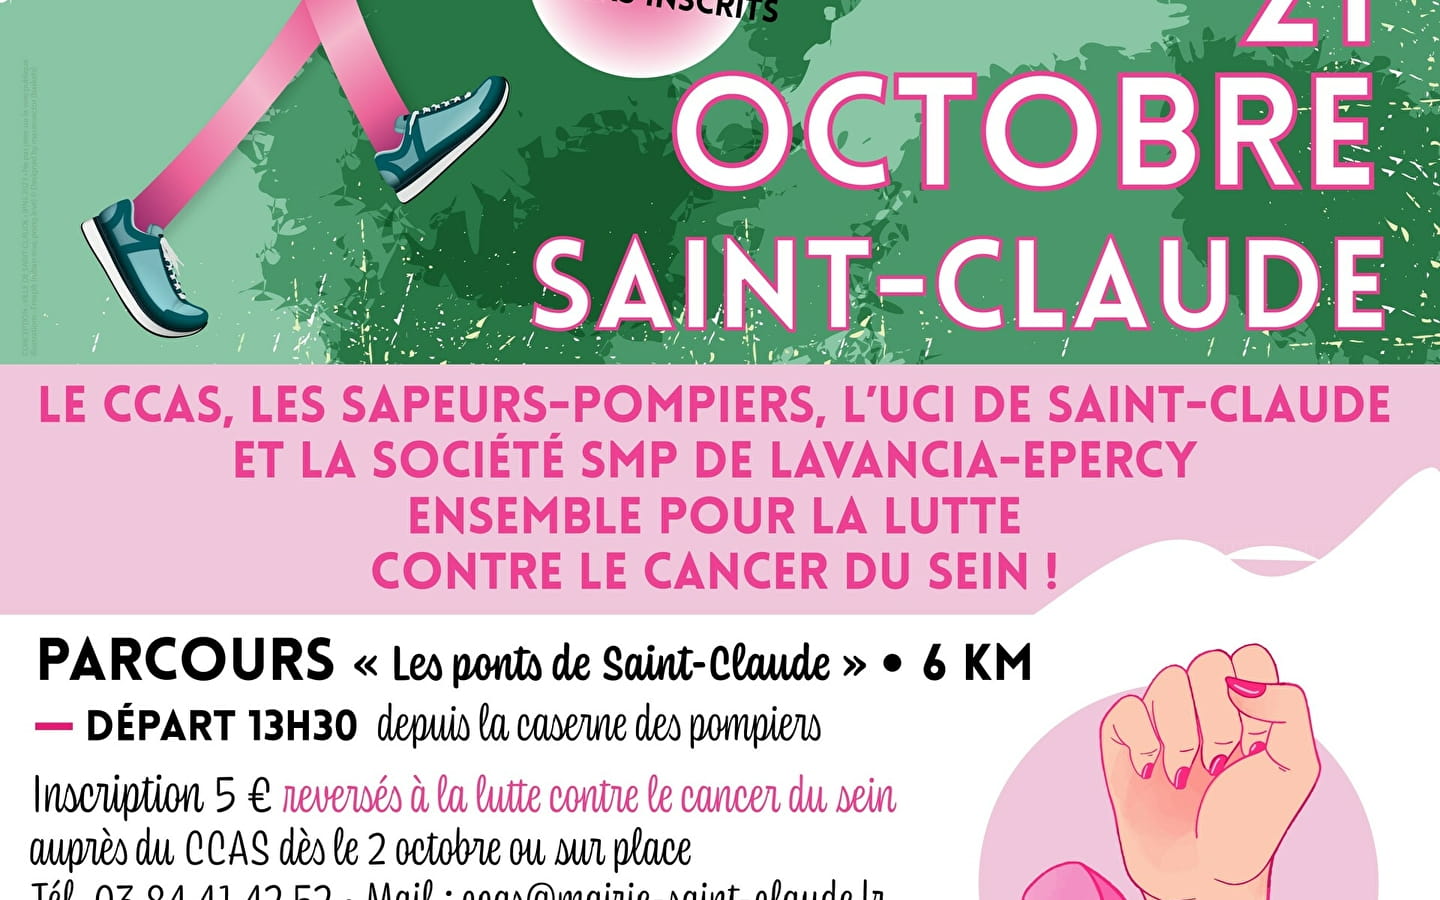 Ville de Saint-Claude - Pink Walk as part of the Pink October campaign